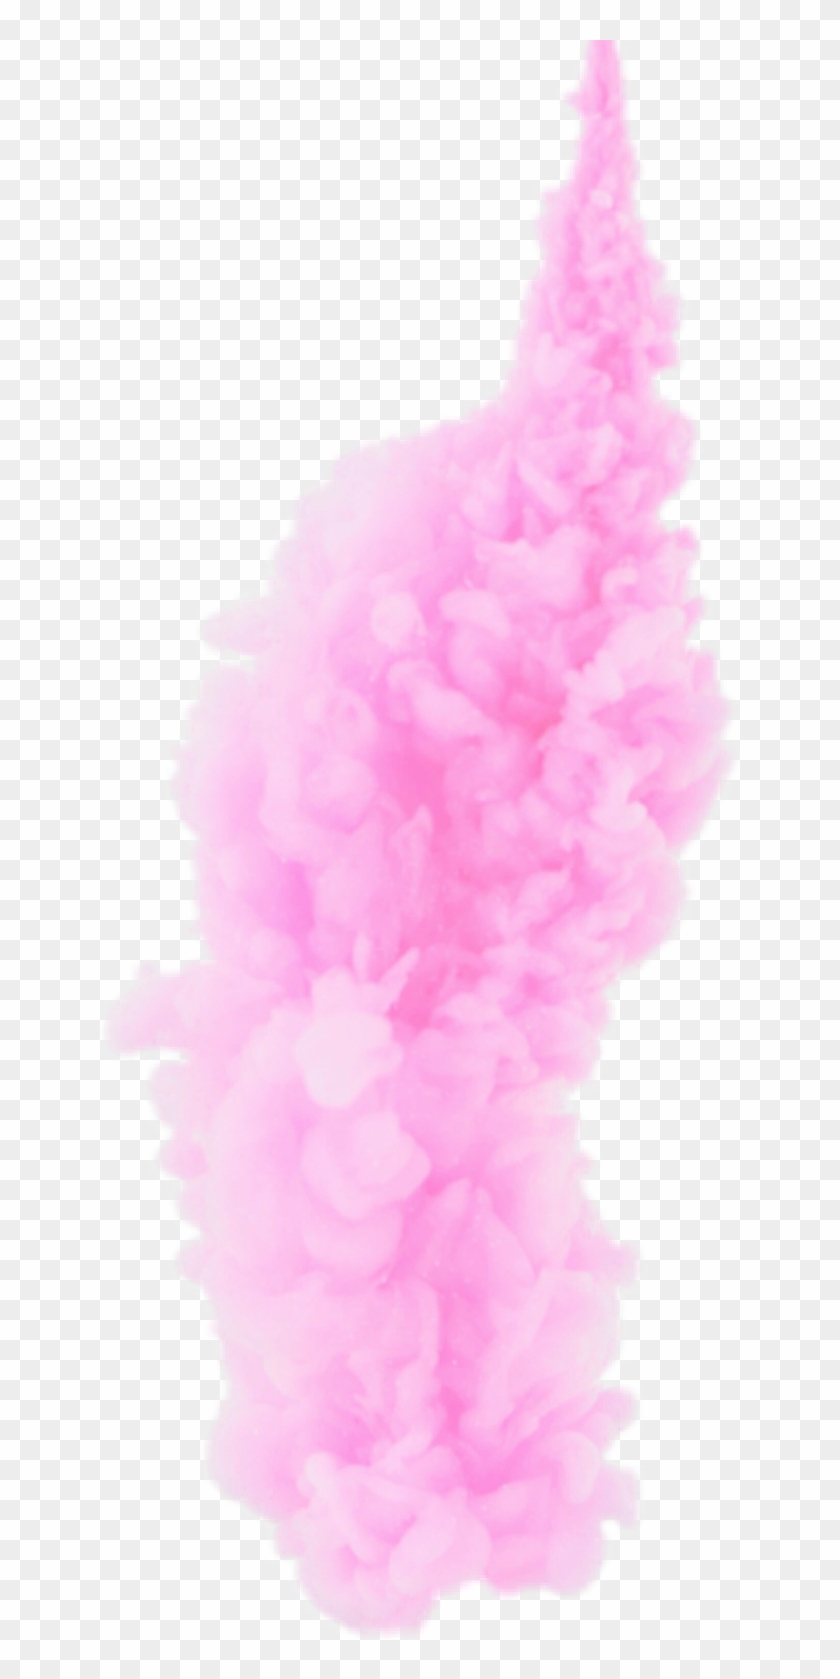 Smoke Humo Pink Purple Tumblr Agua Water Rosado Clipart #1742044